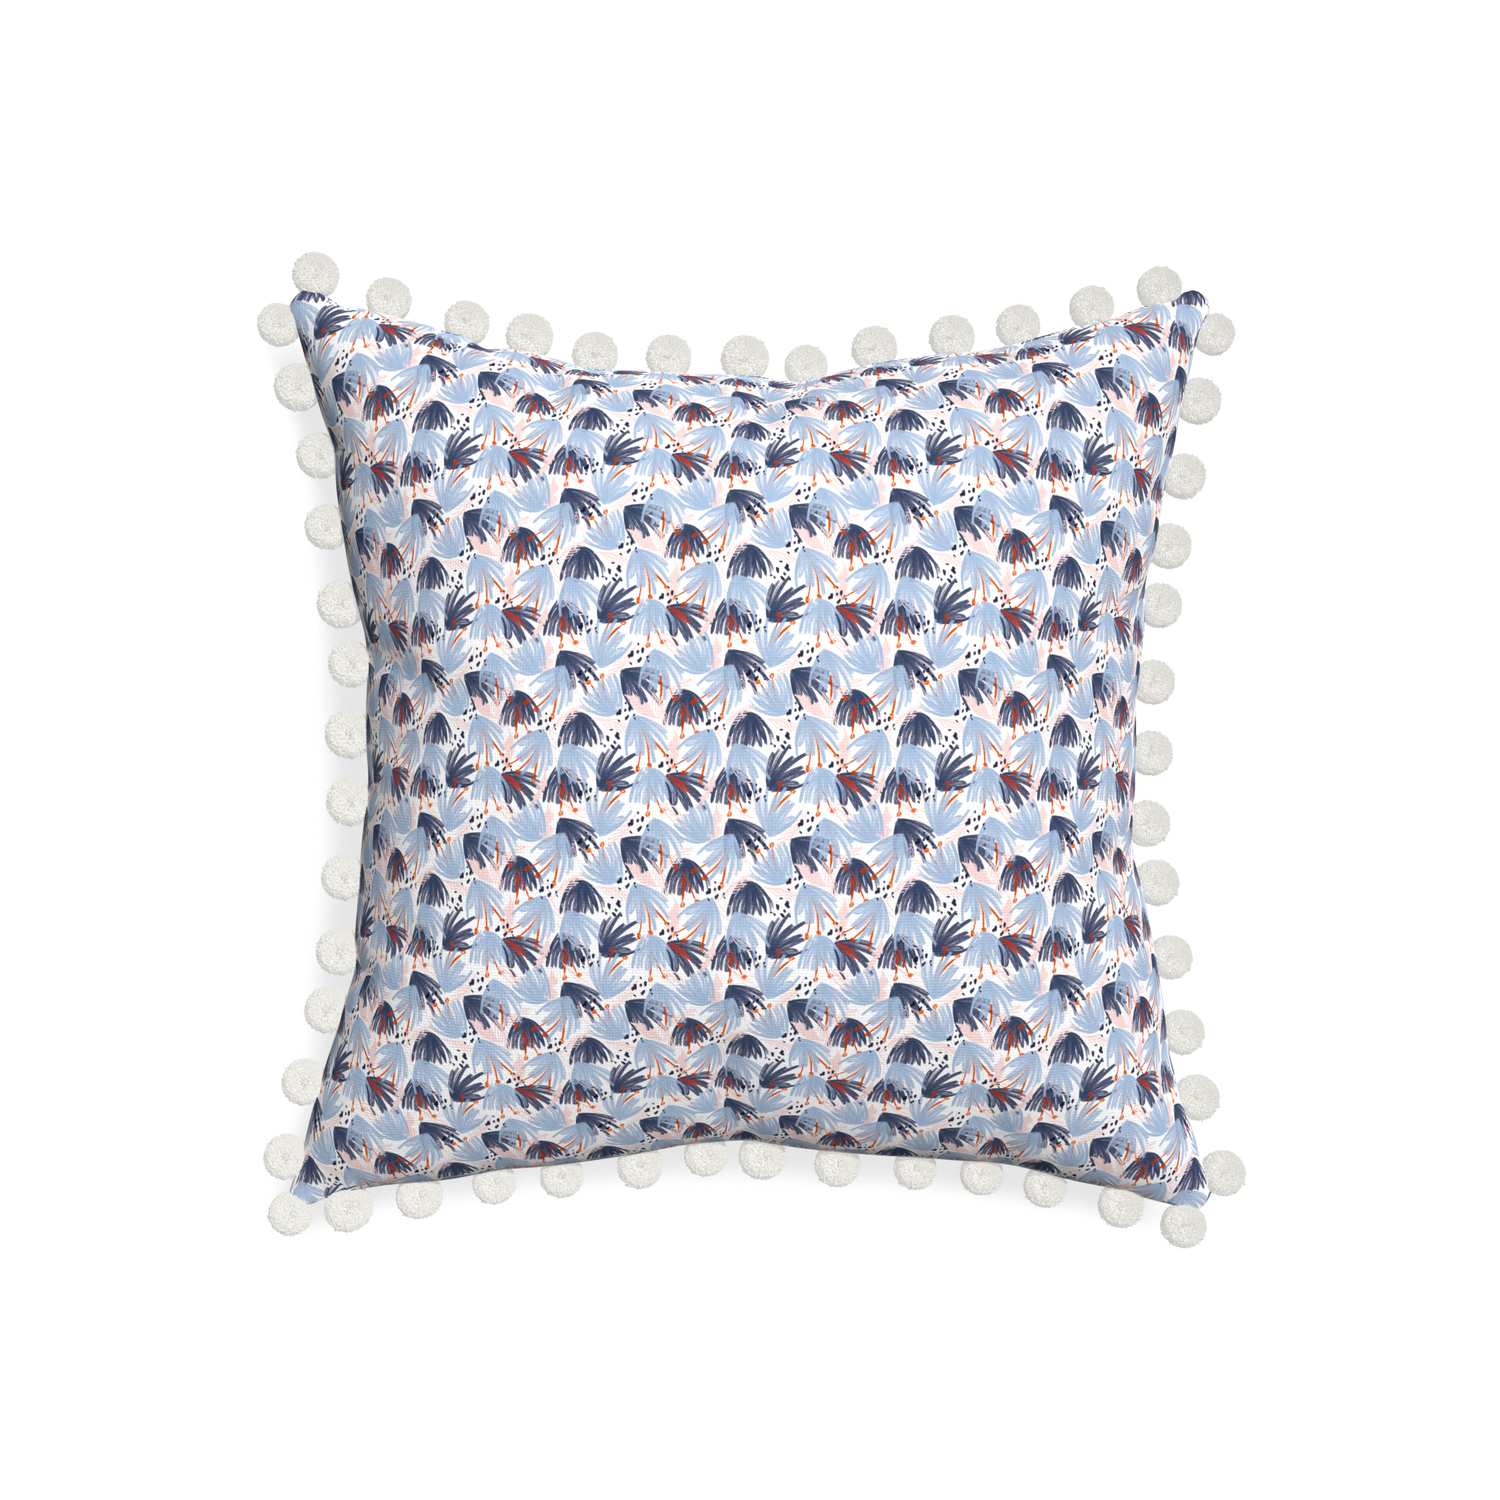 20-square eden blue custom pillow with snow pom pom on white background